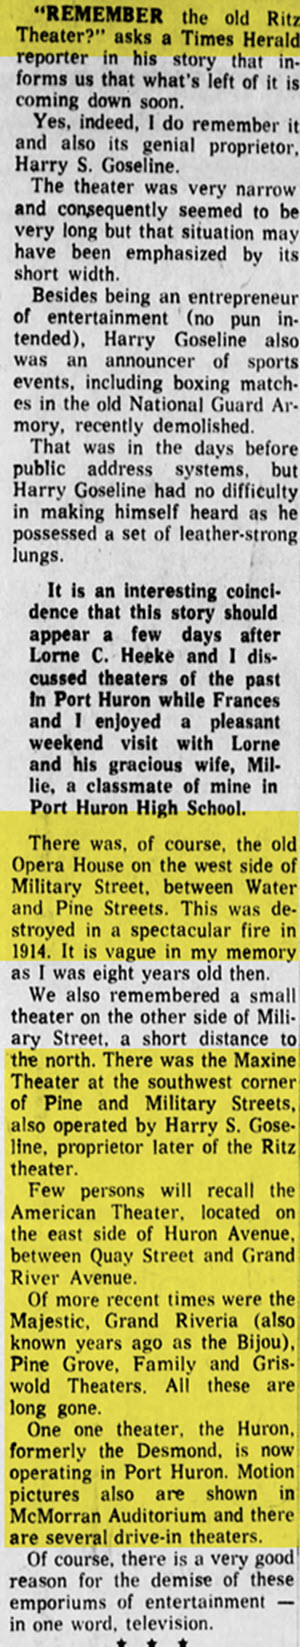 Maxine Theatre - Sun Dec 1969 Article About Port Huron Theaters